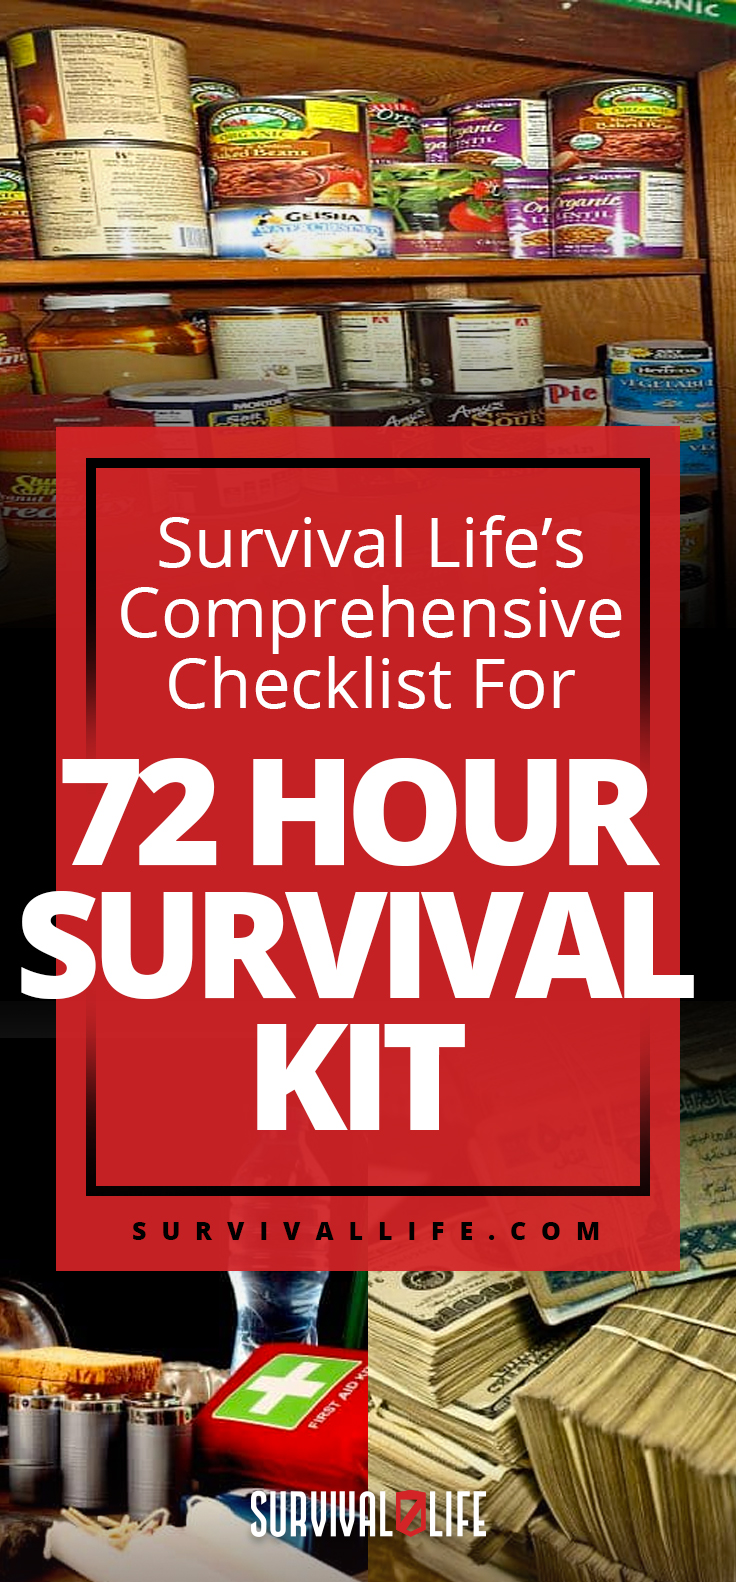 Survival Life's Comprehensive Checklist For 72 Hour Survival Kit